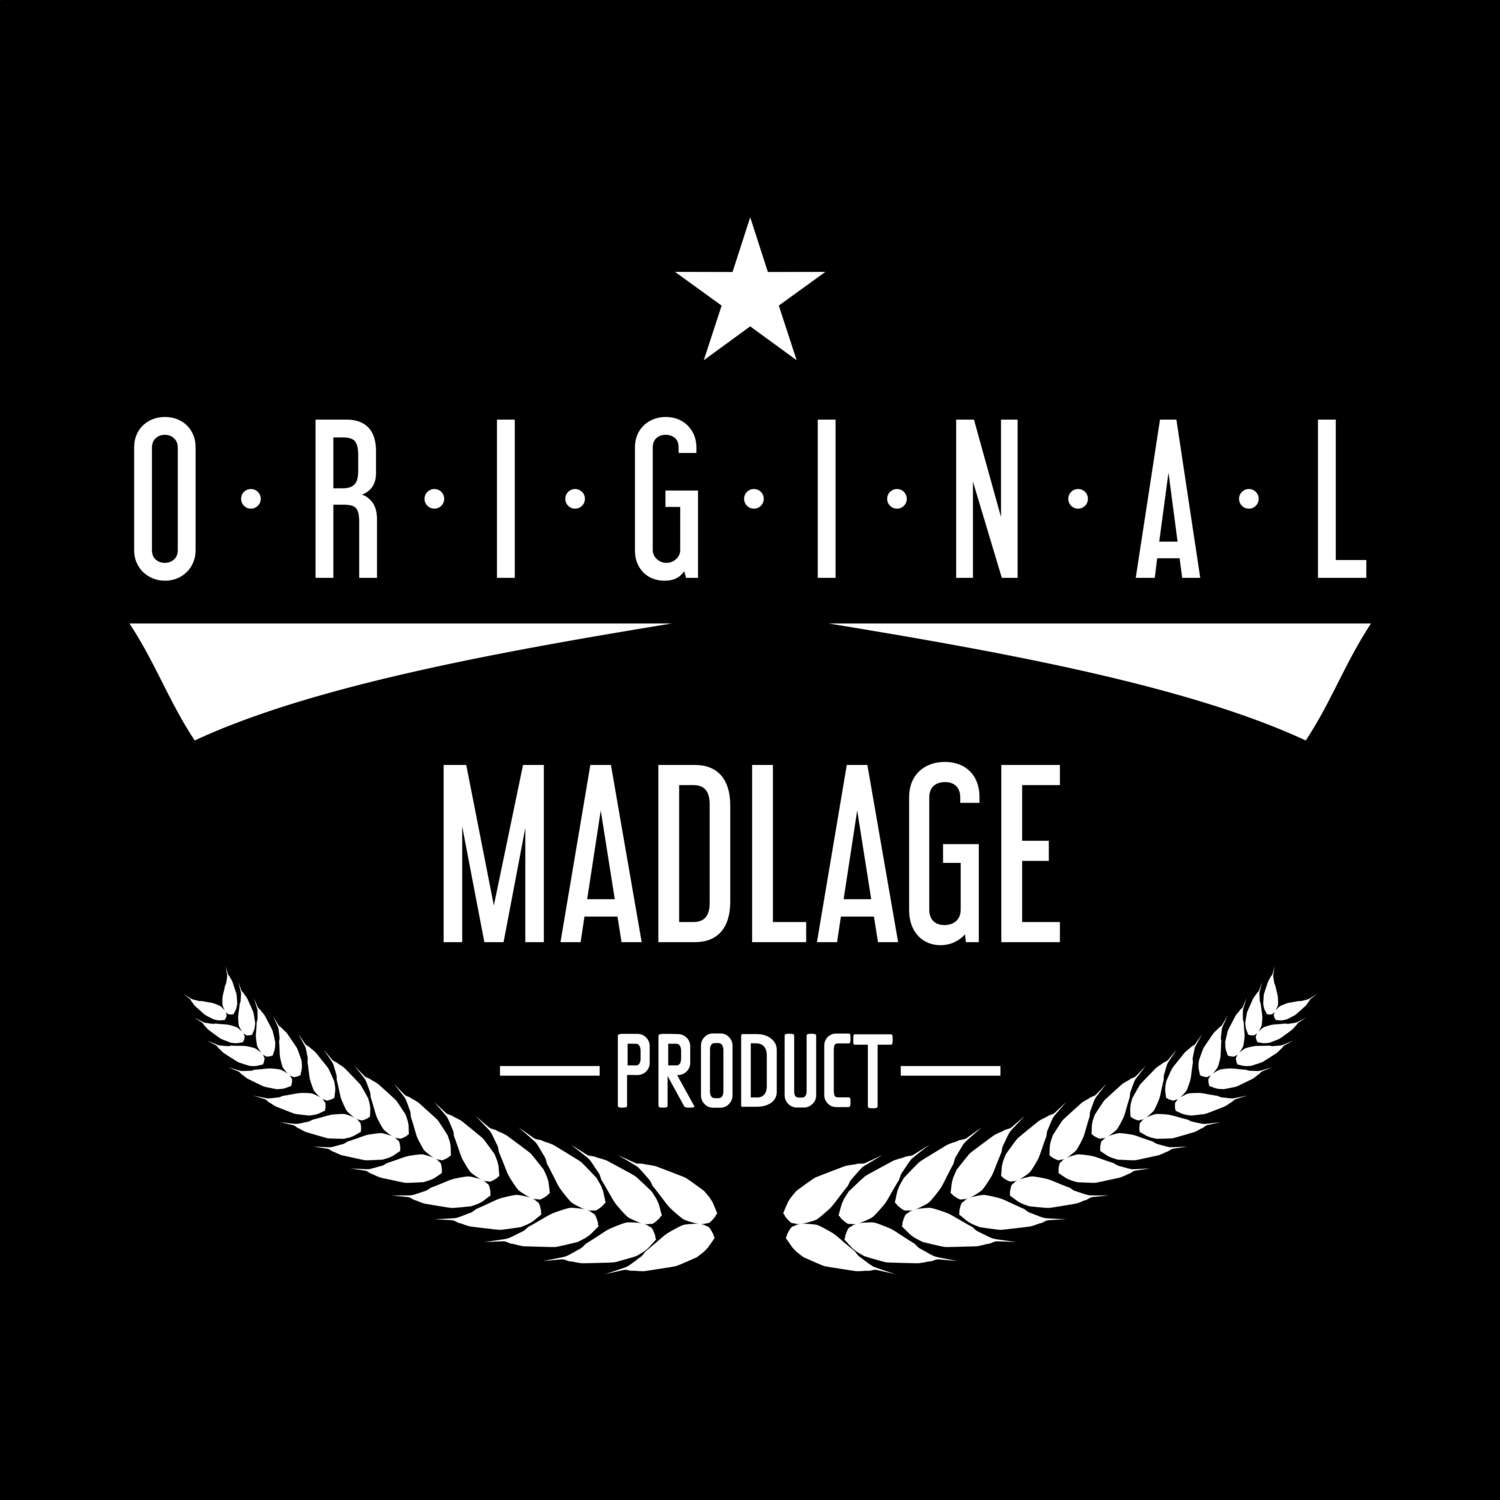 Madlage T-Shirt »Original Product«